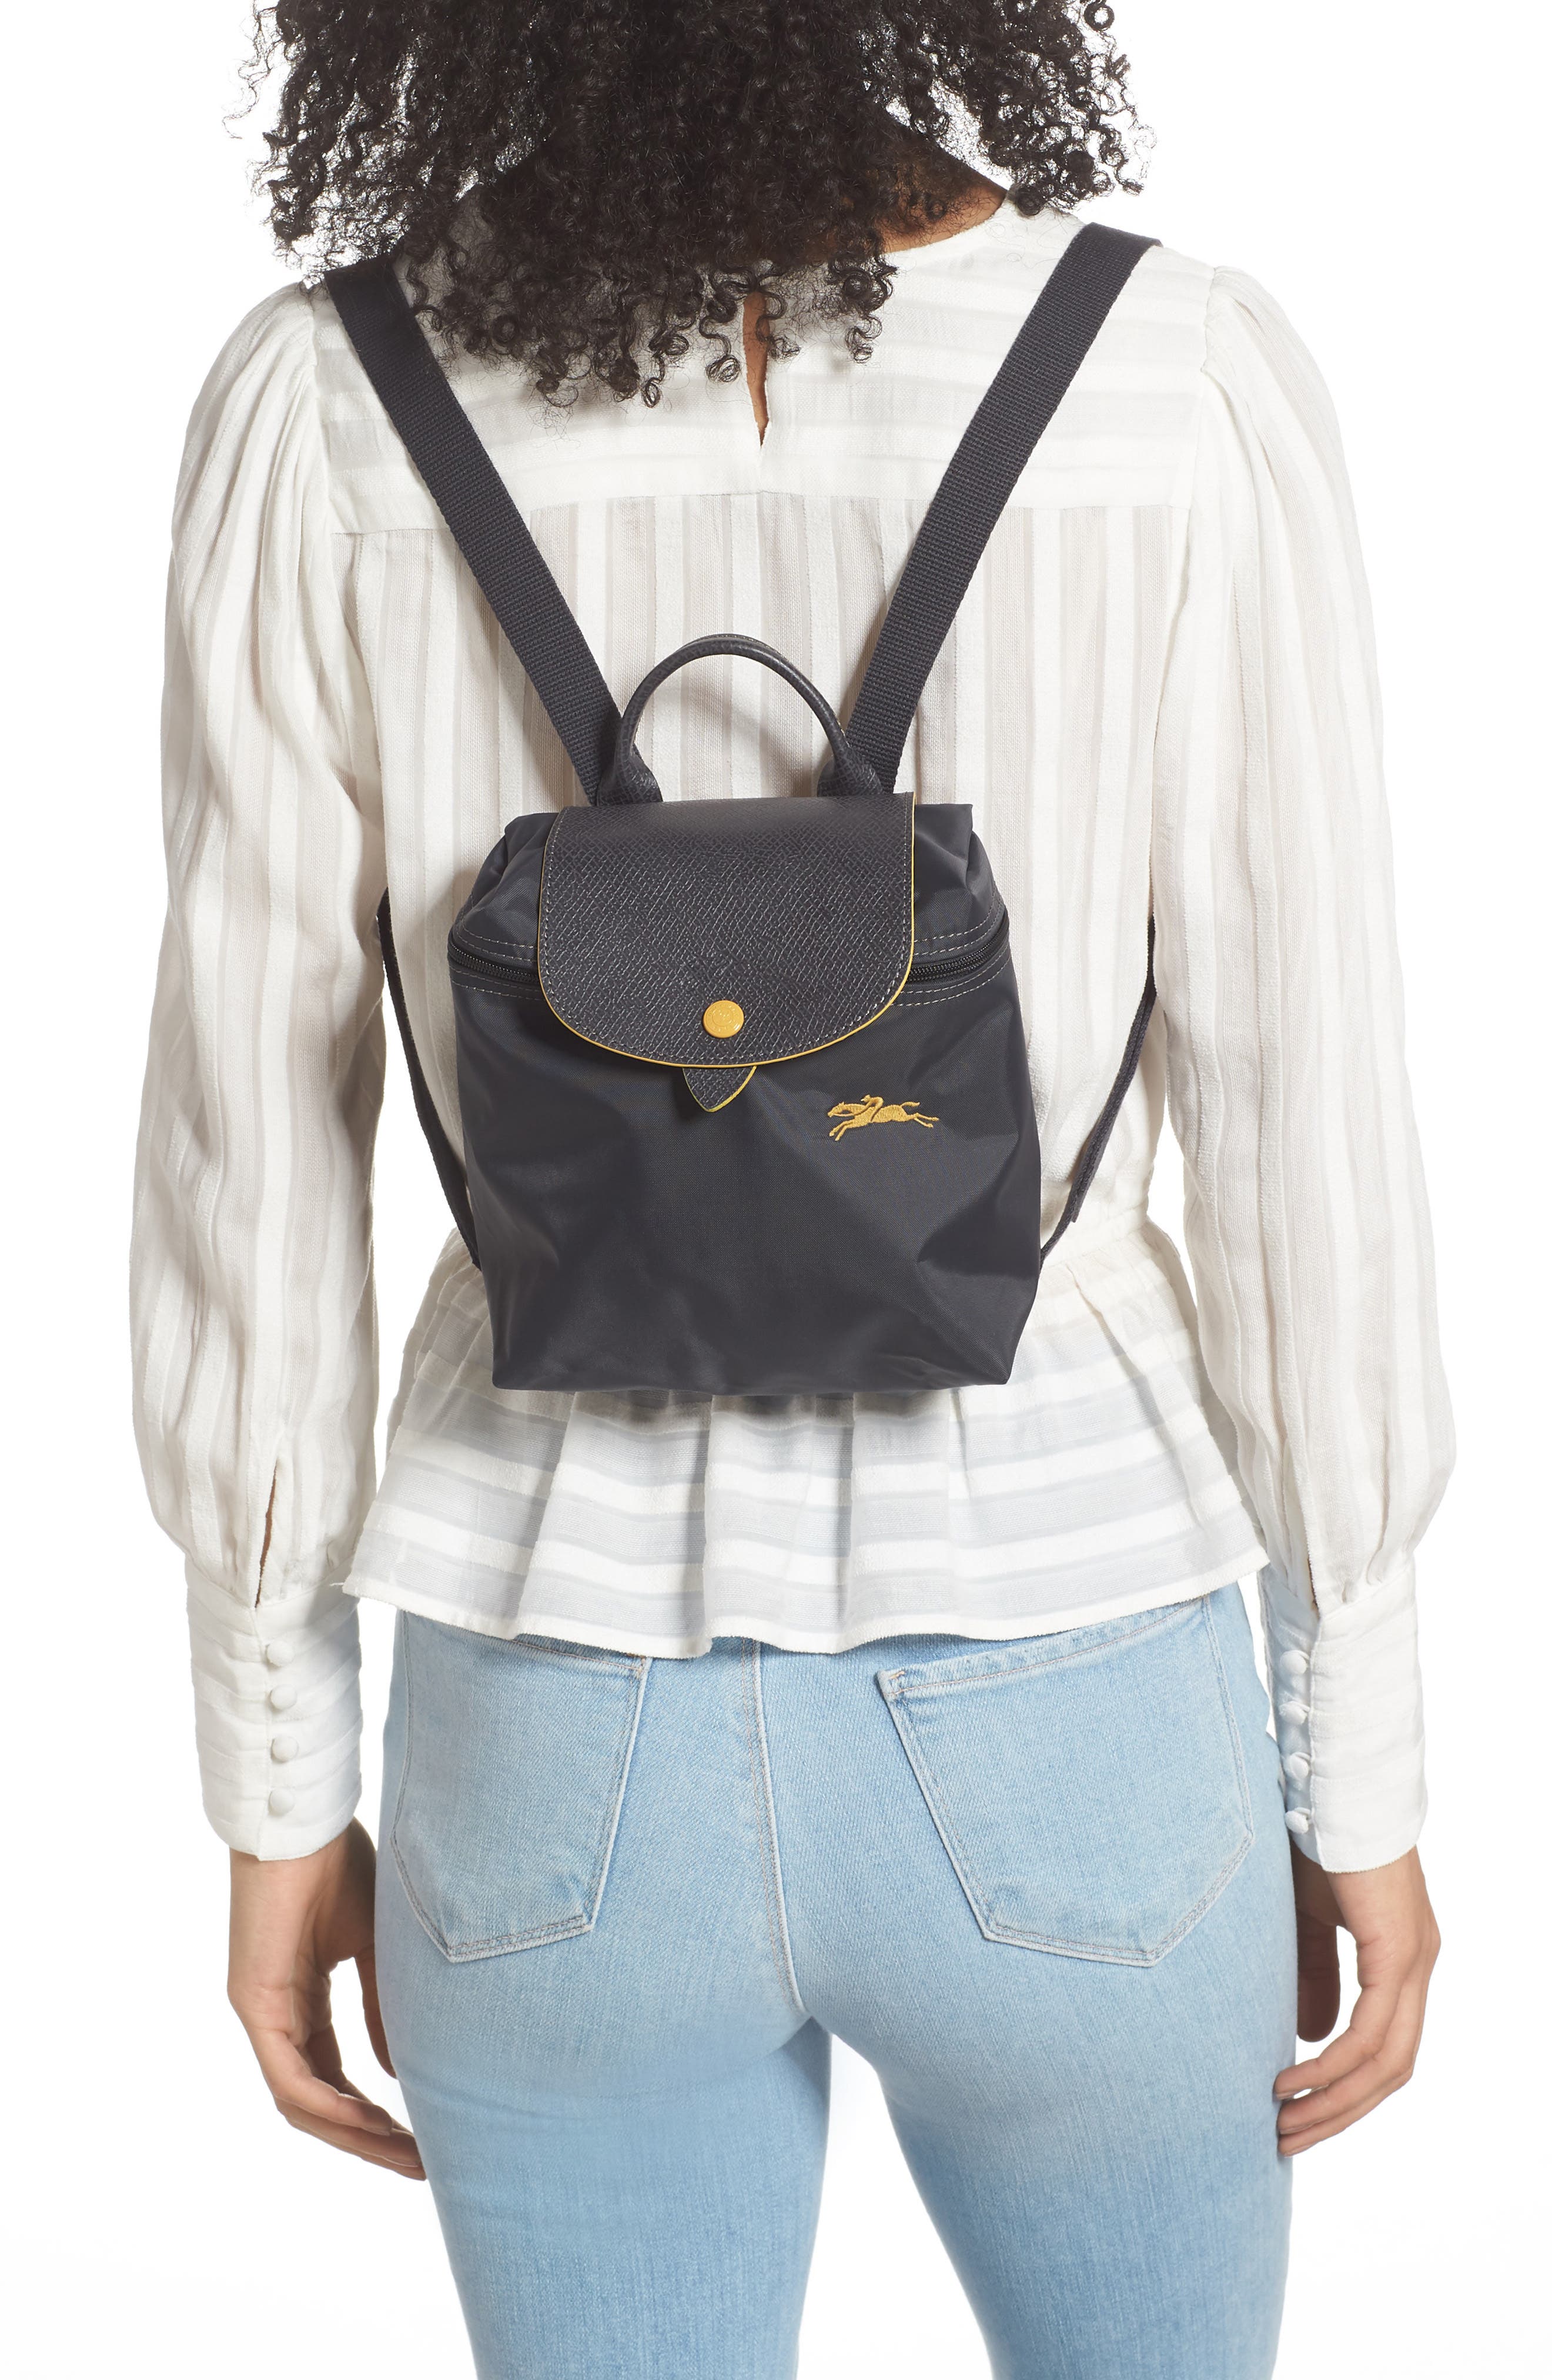 longchamp mini backpack